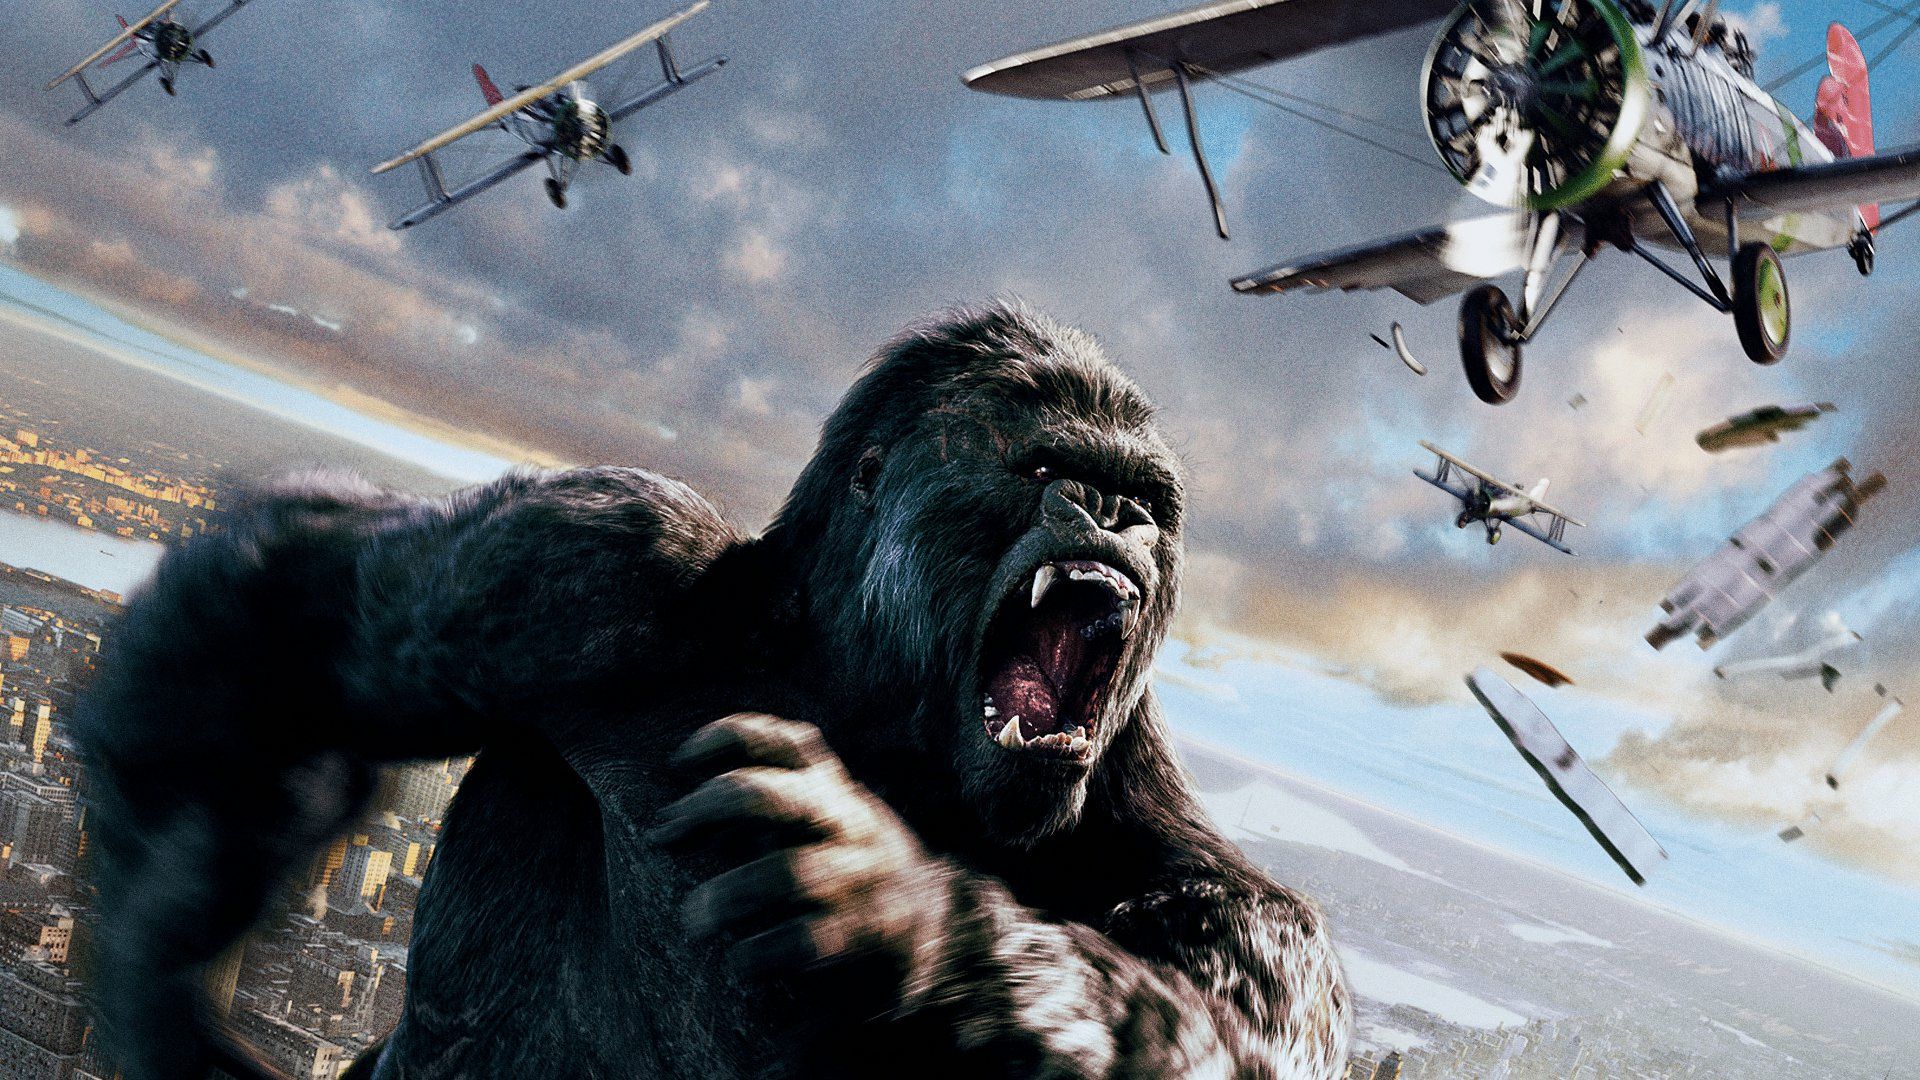 Movie King Kong 2005 1920x1080